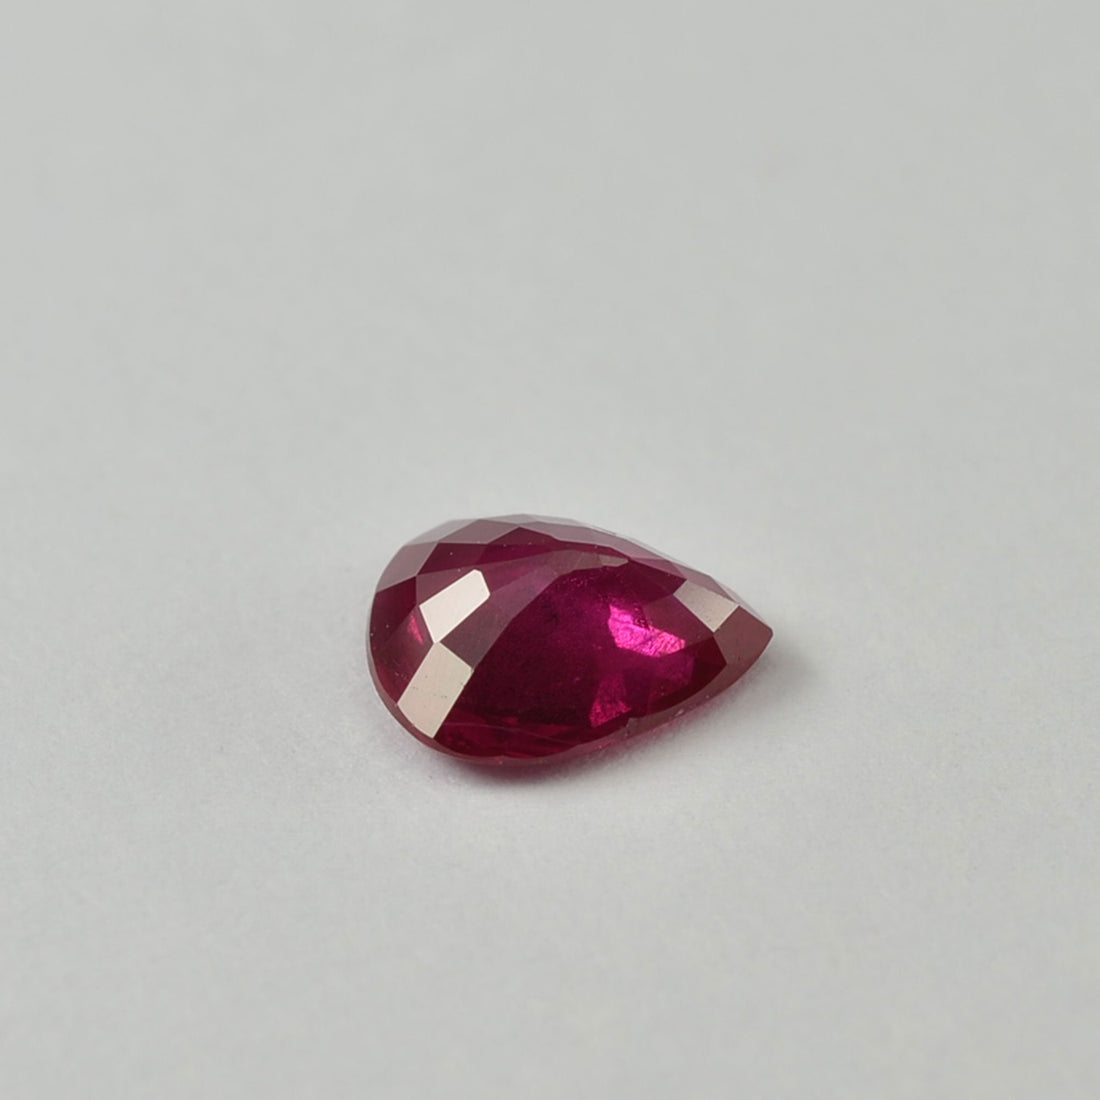 0.61 cts Natural Burma Ruby Loose Gemstone Pear Cut